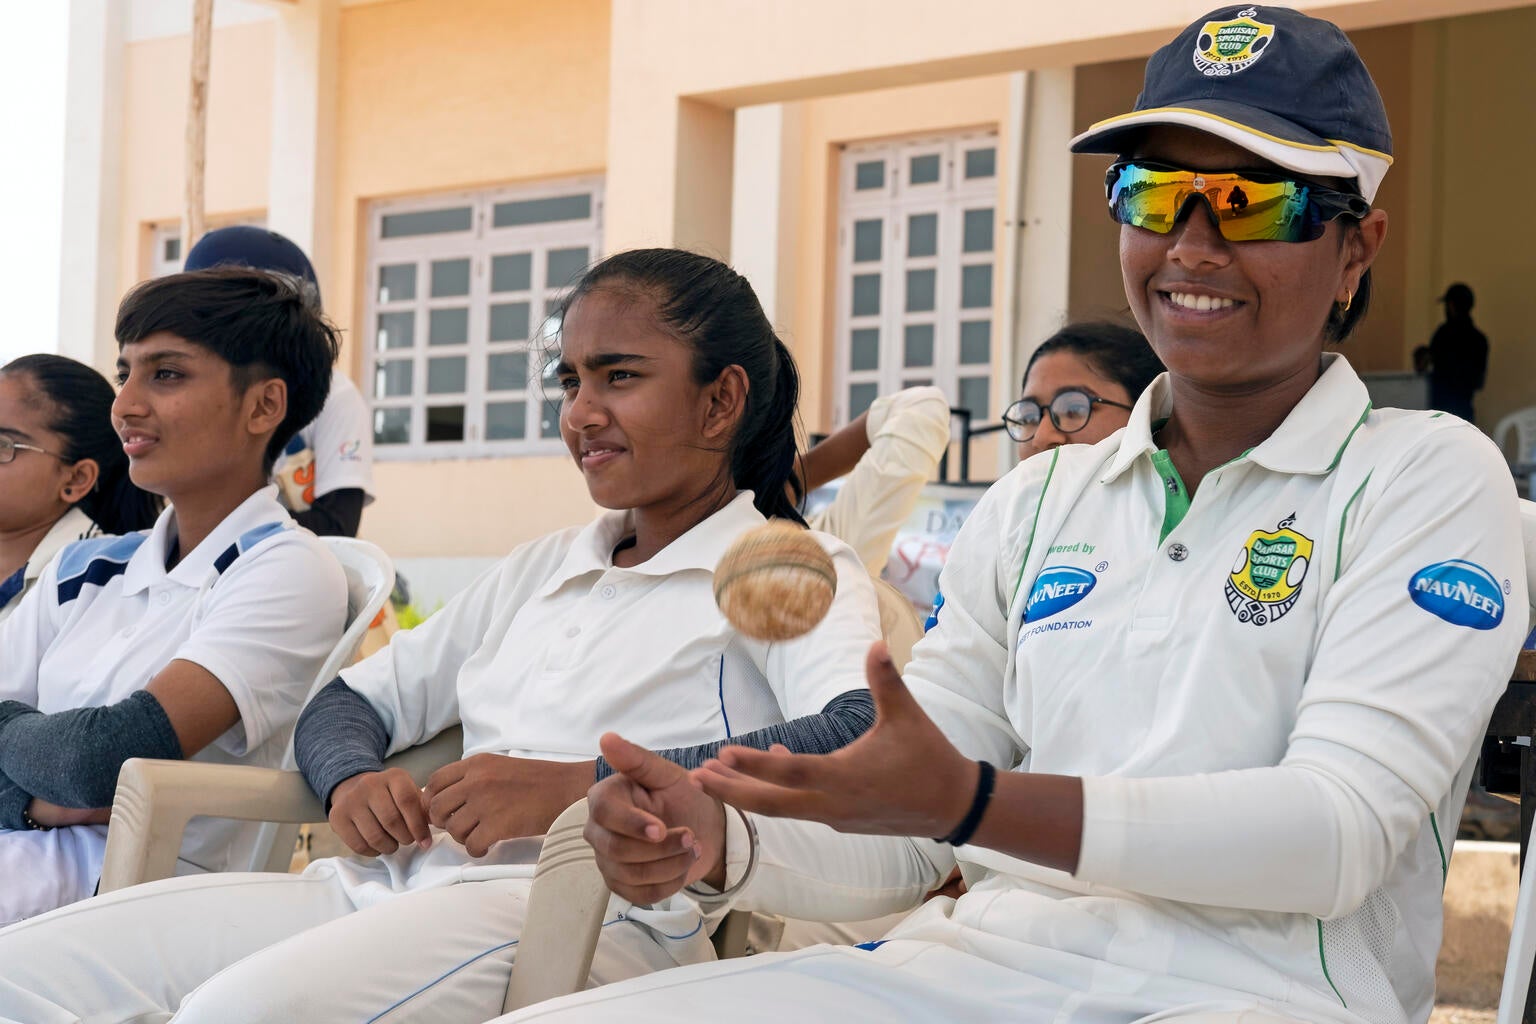 Indian girl's cricket team